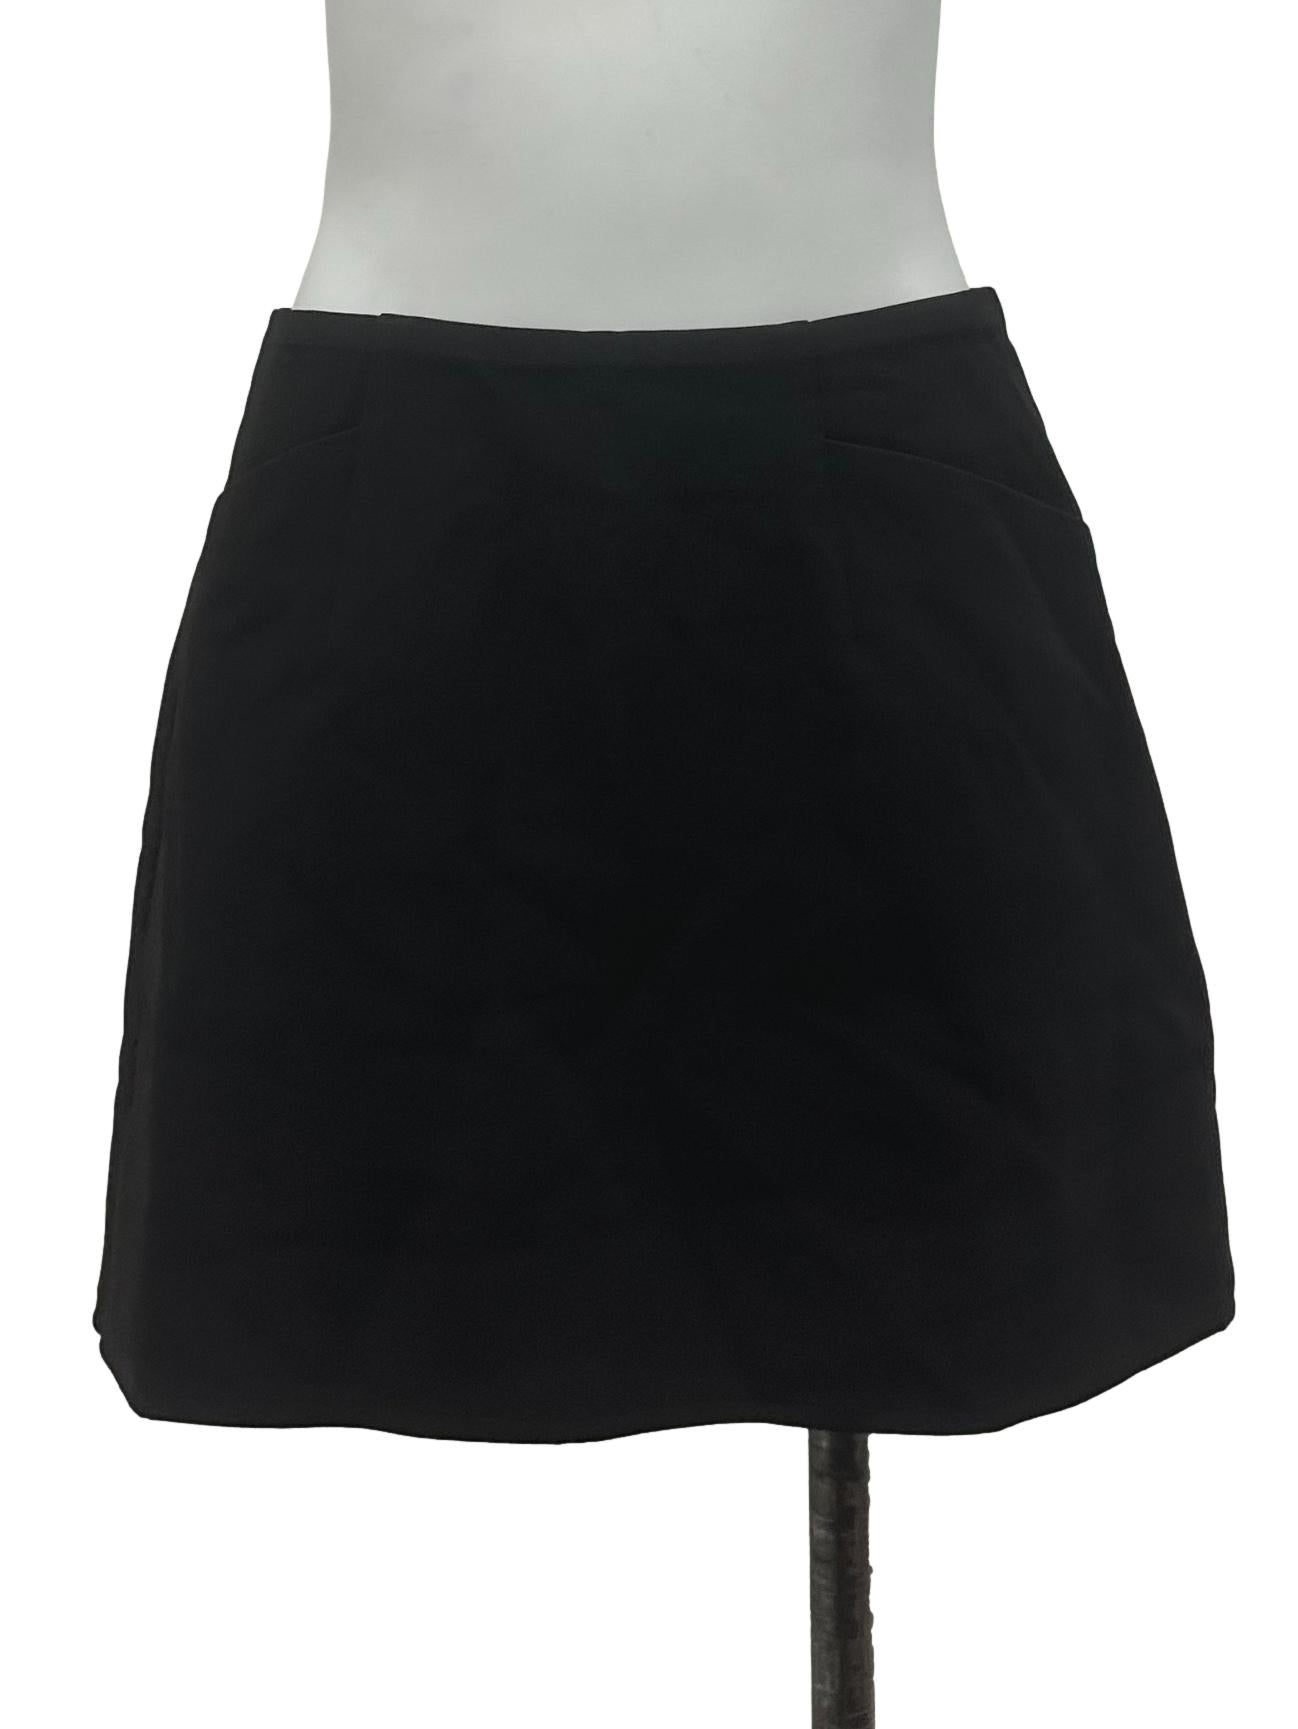 Pitch Black Skirt